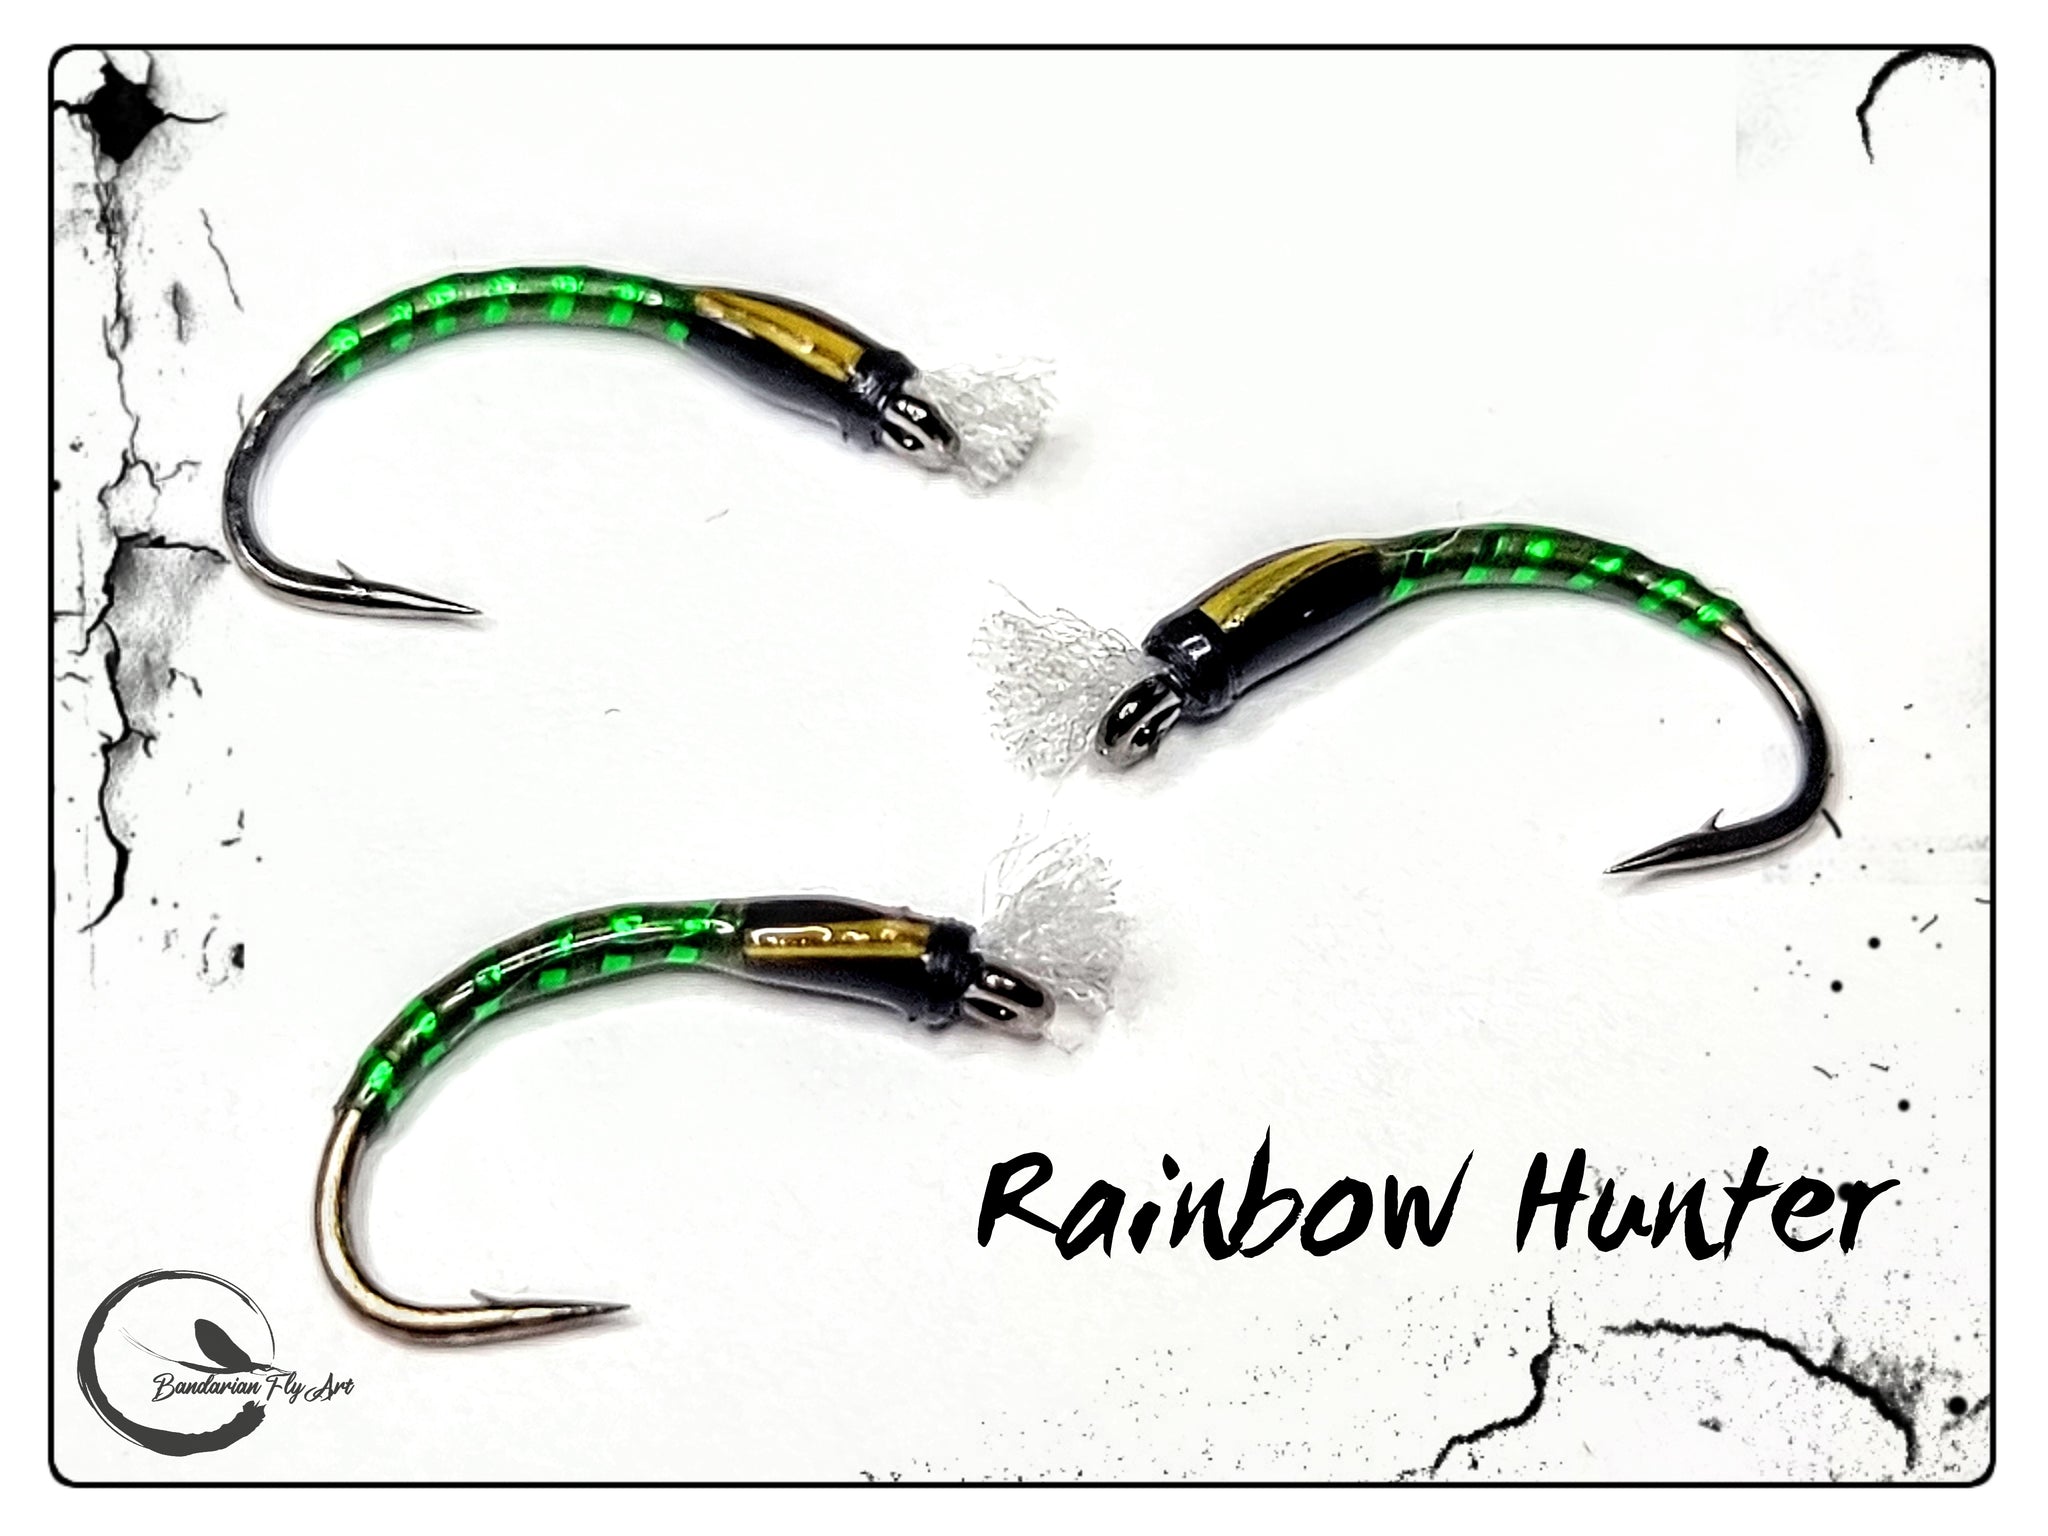 Buzzer - Rainbow Hunter oförtyngd